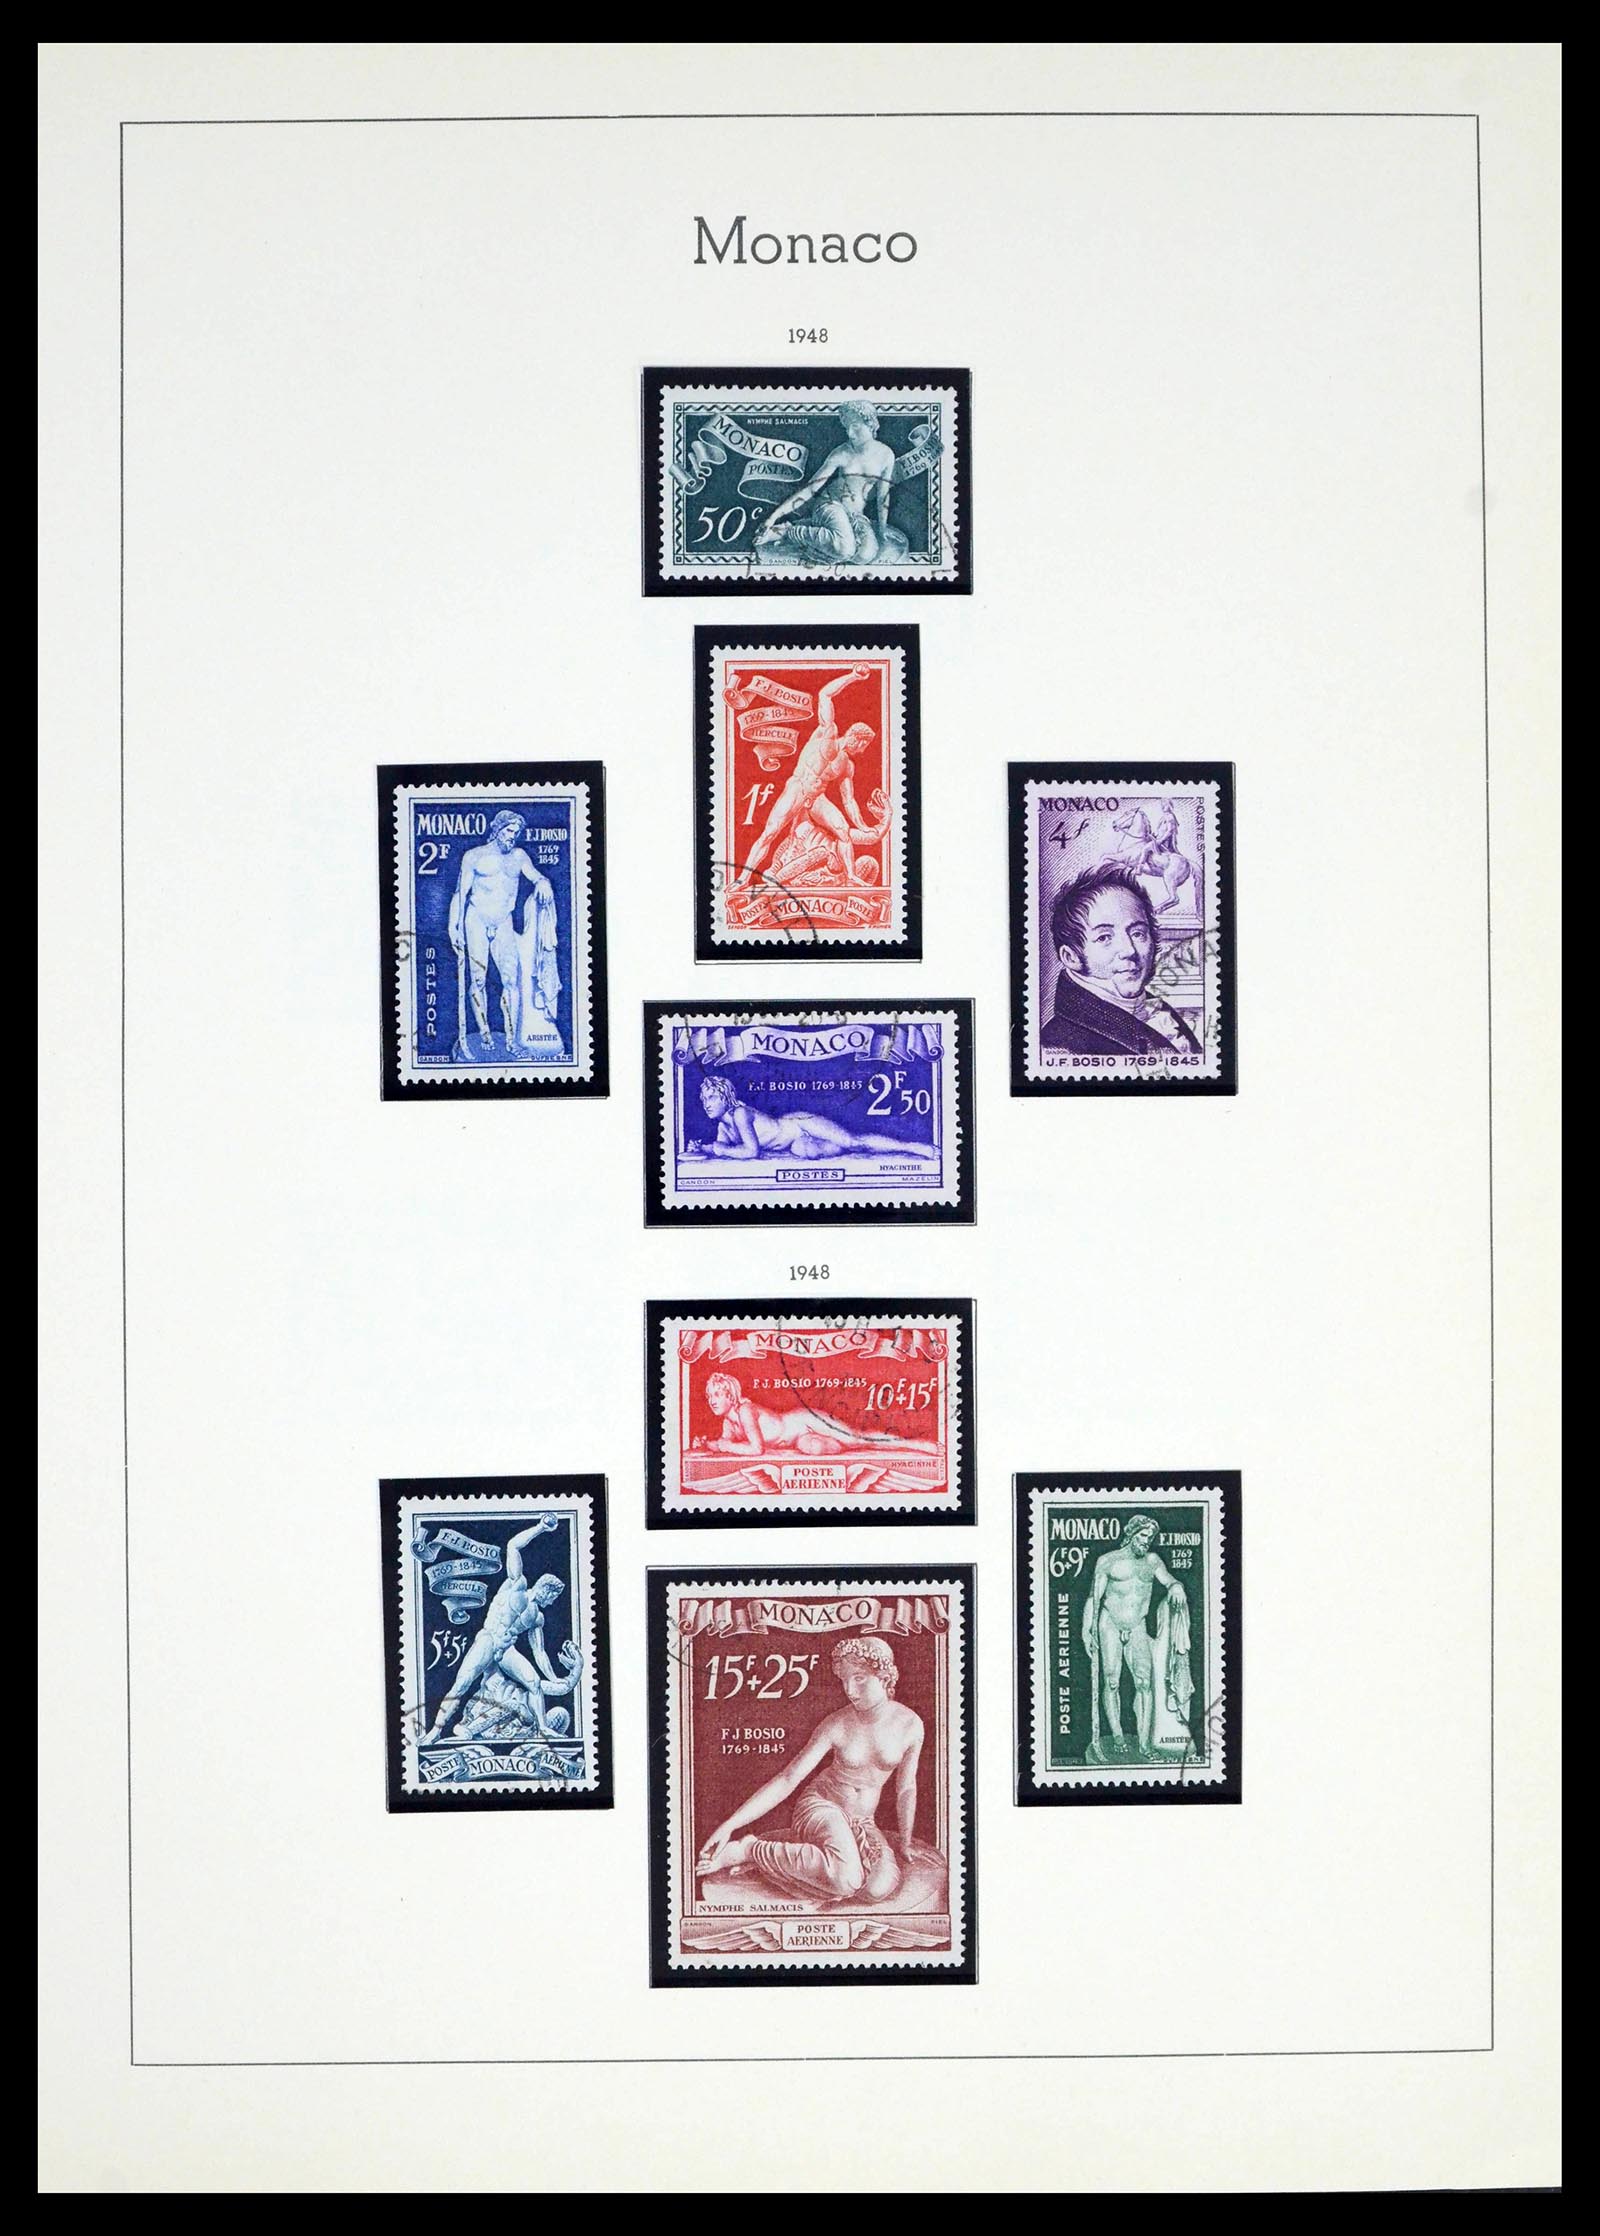 39392 0030 - Stamp collection 39392 Monaco 1885-1999.